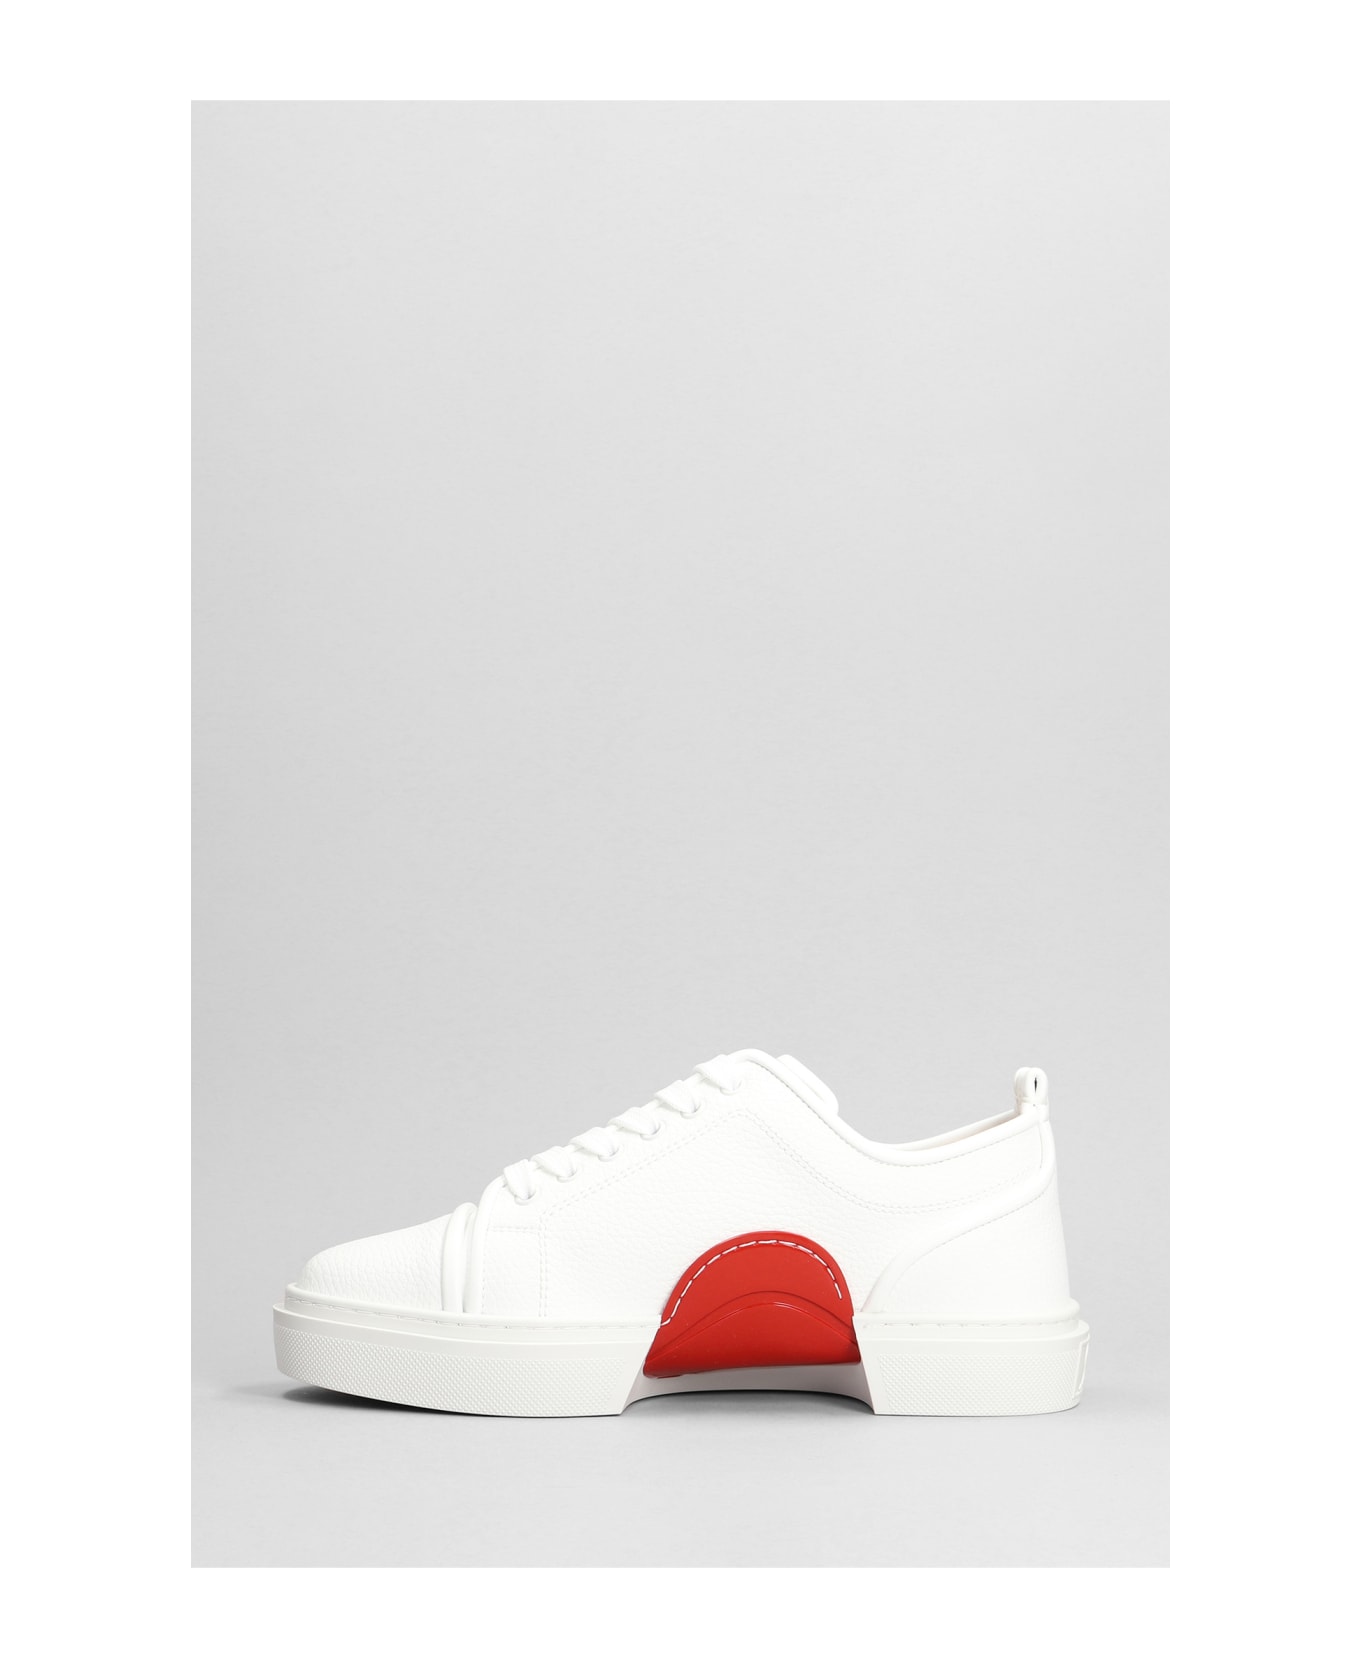 Christian Louboutin Adolon Junior Sneakers In White Leather - white スニーカー